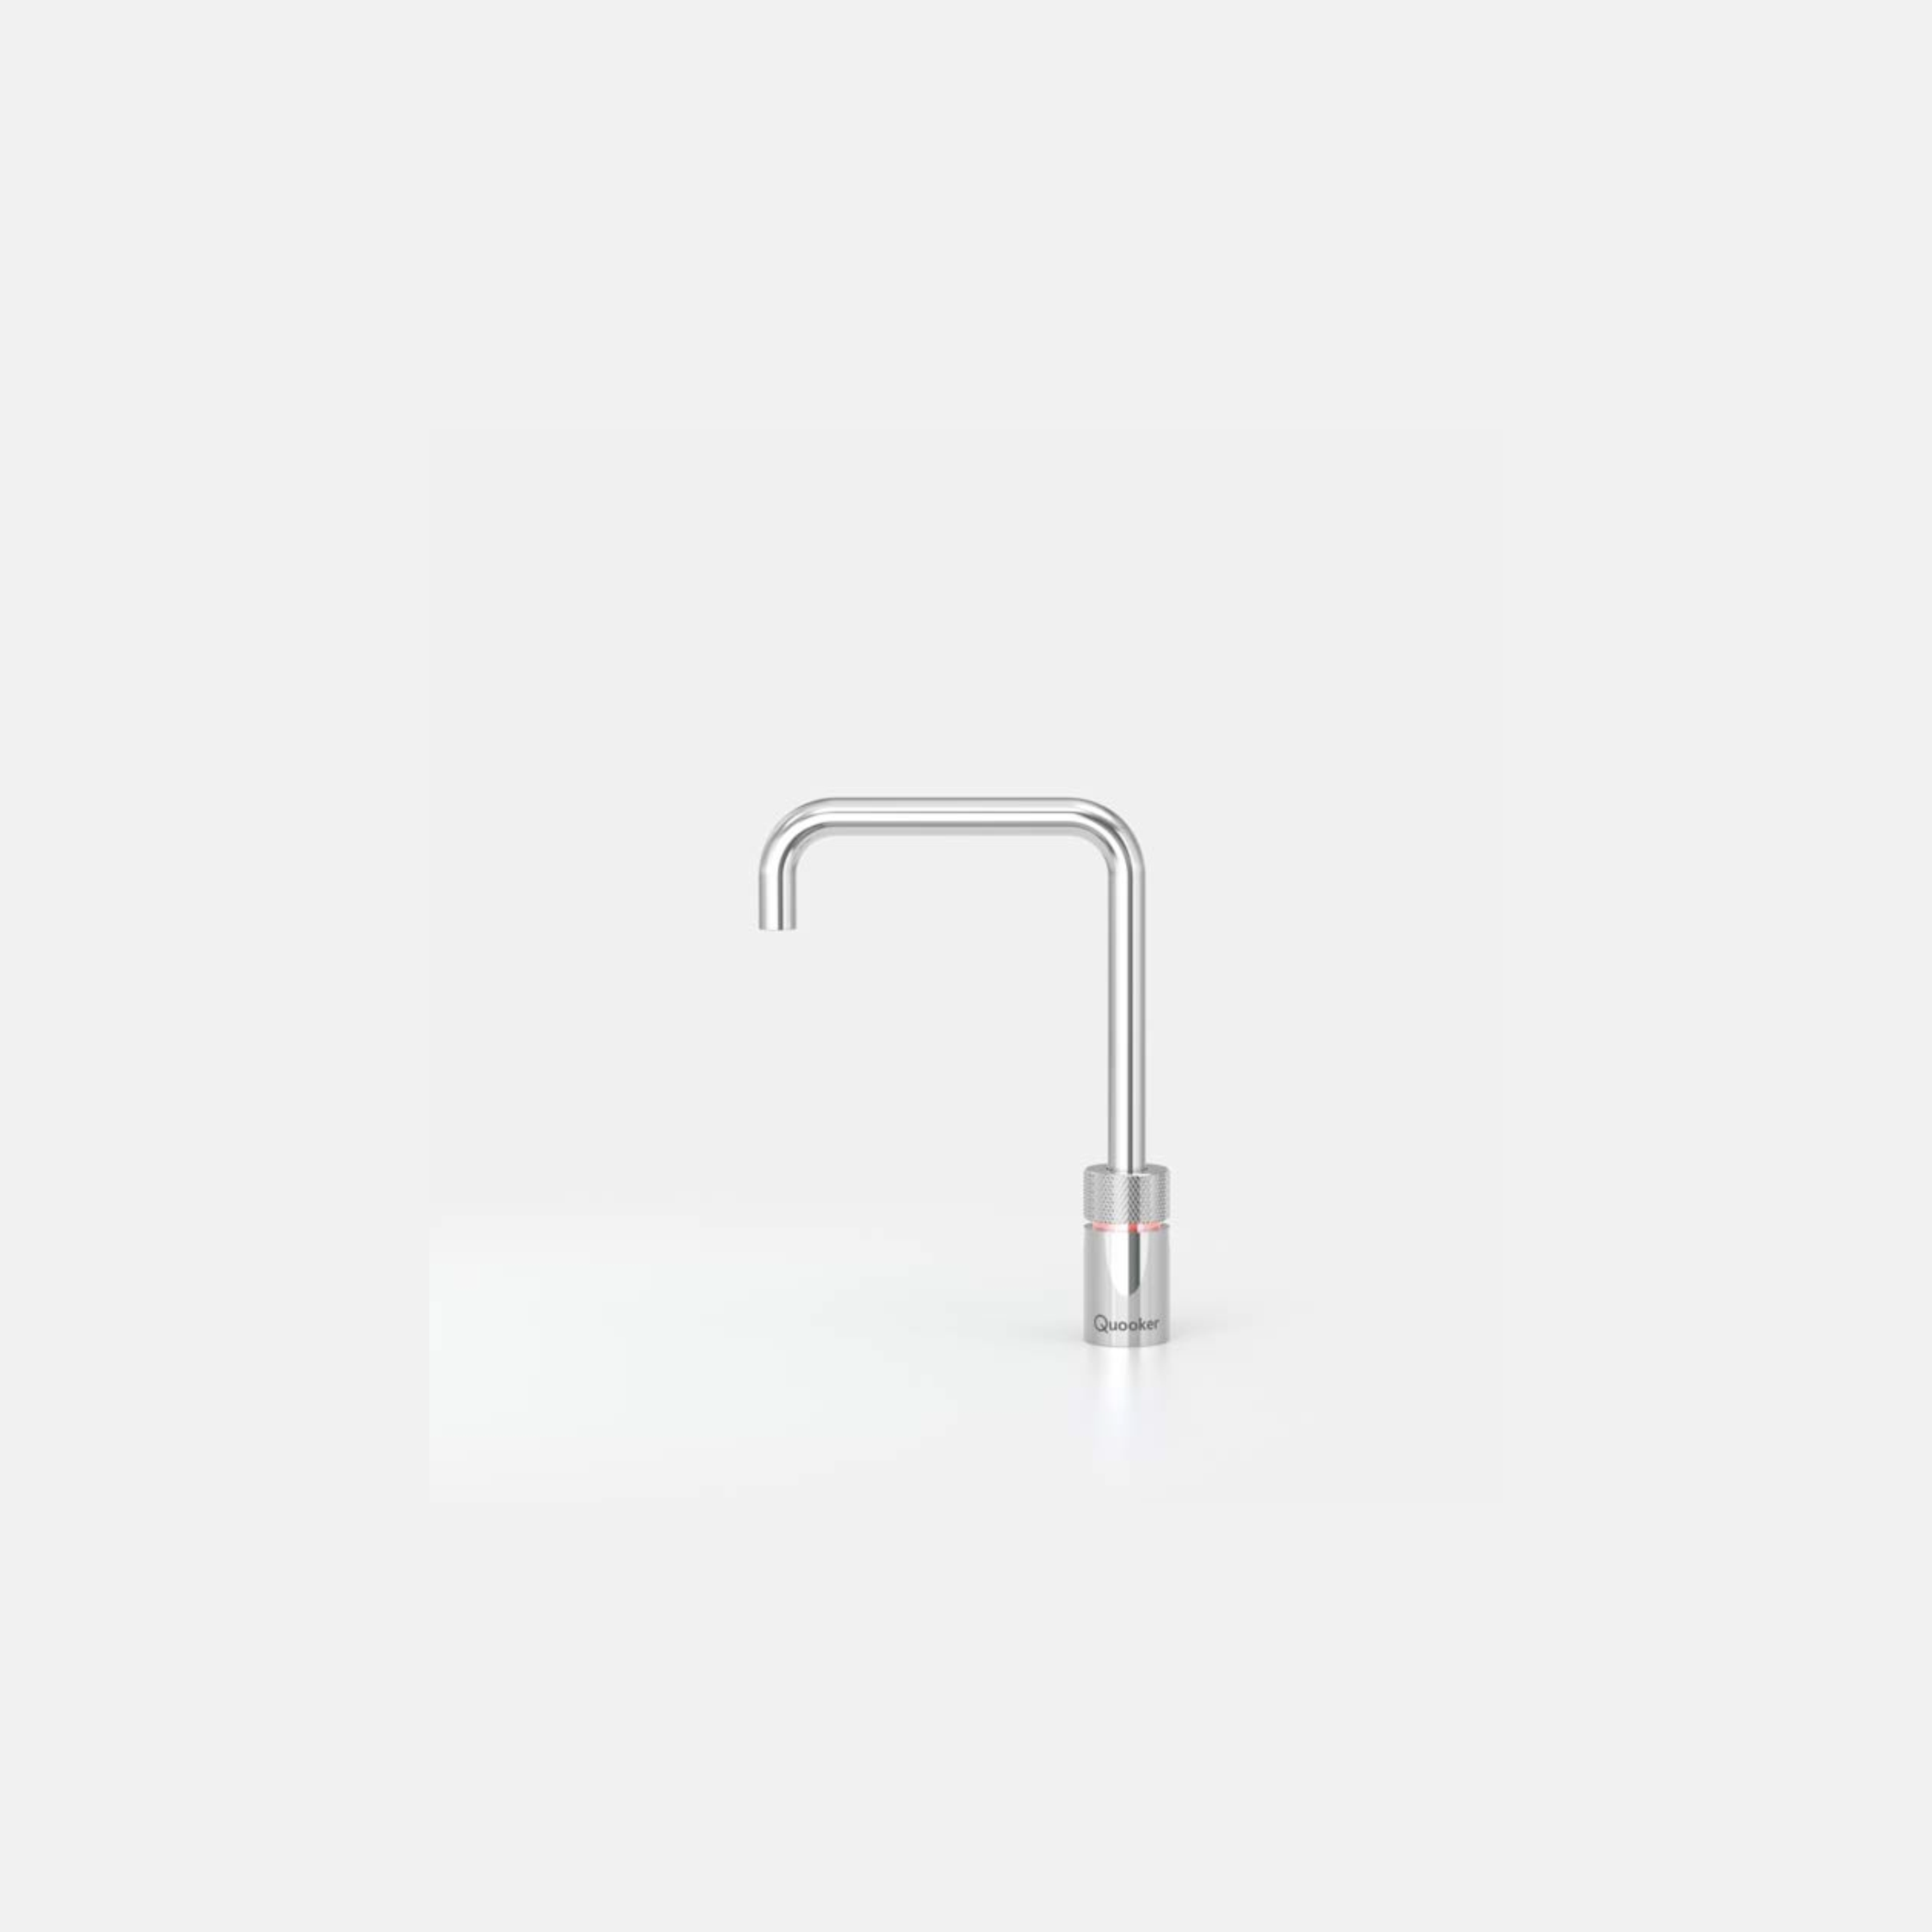 Quooker Nordic Square single tap